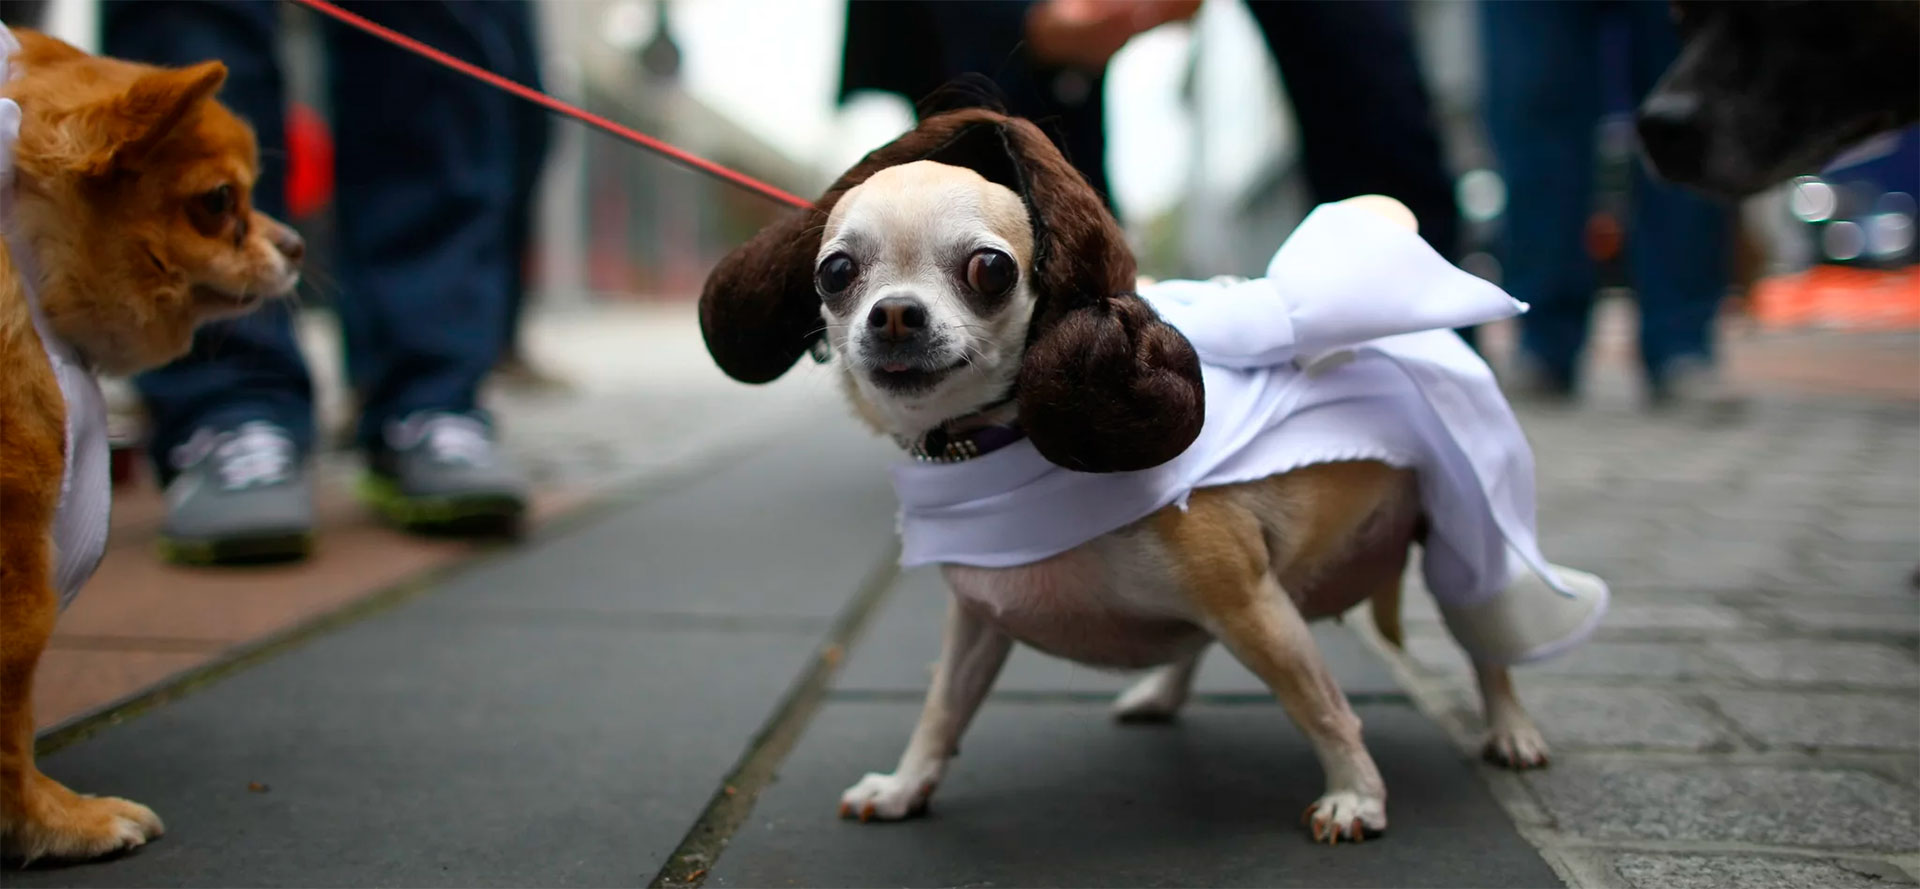 Small dog Halloween costumes.